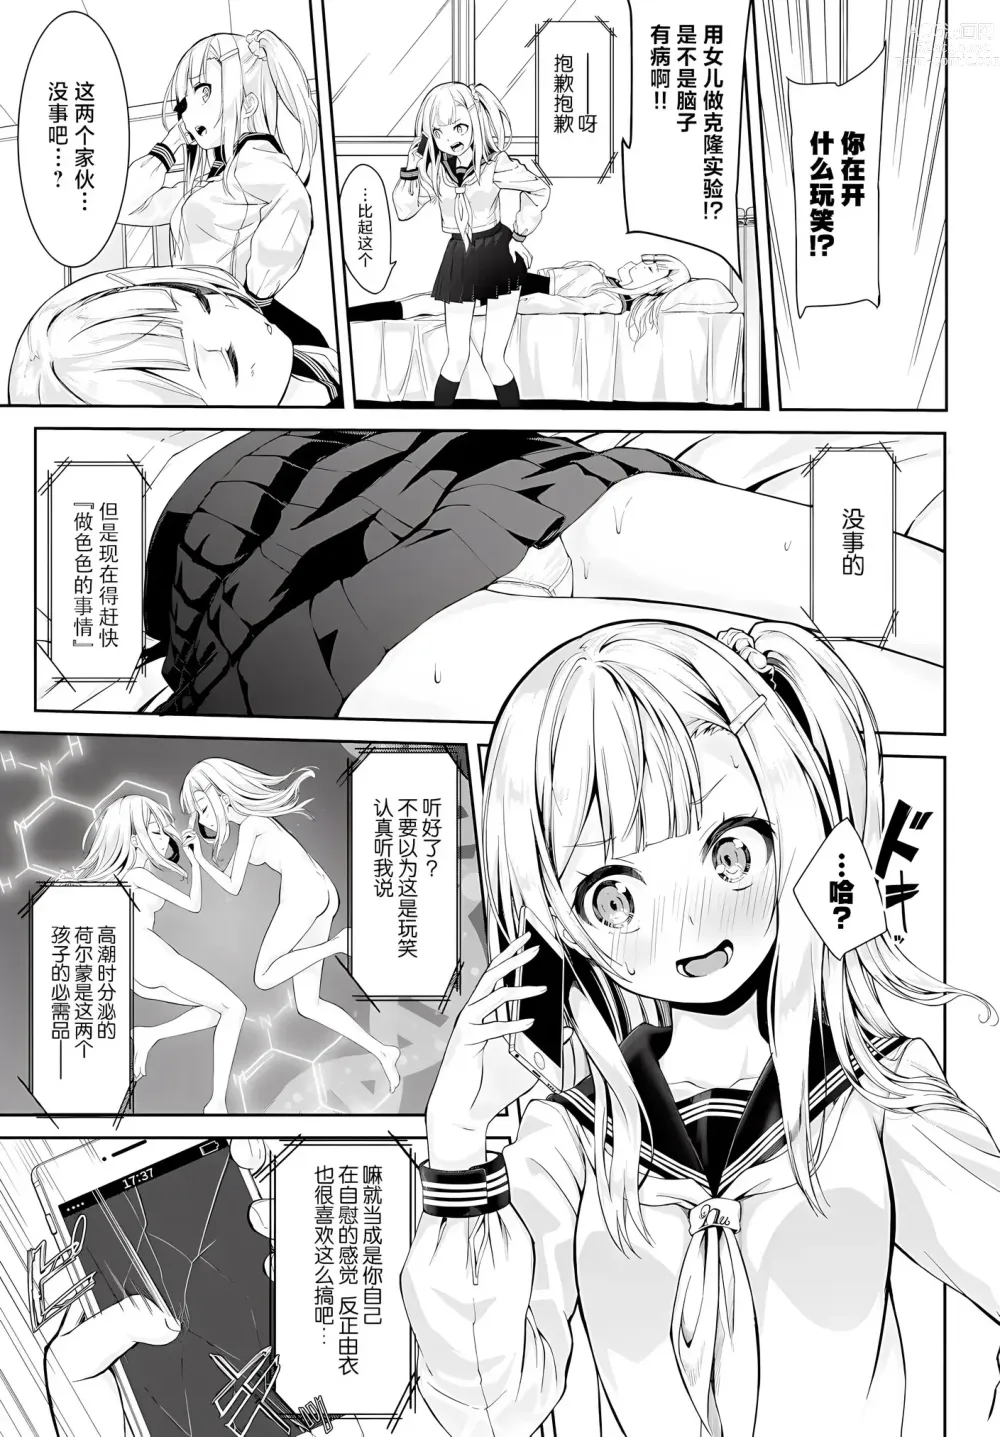 Page 45 of manga Skirt no Naka wa Fantastic!